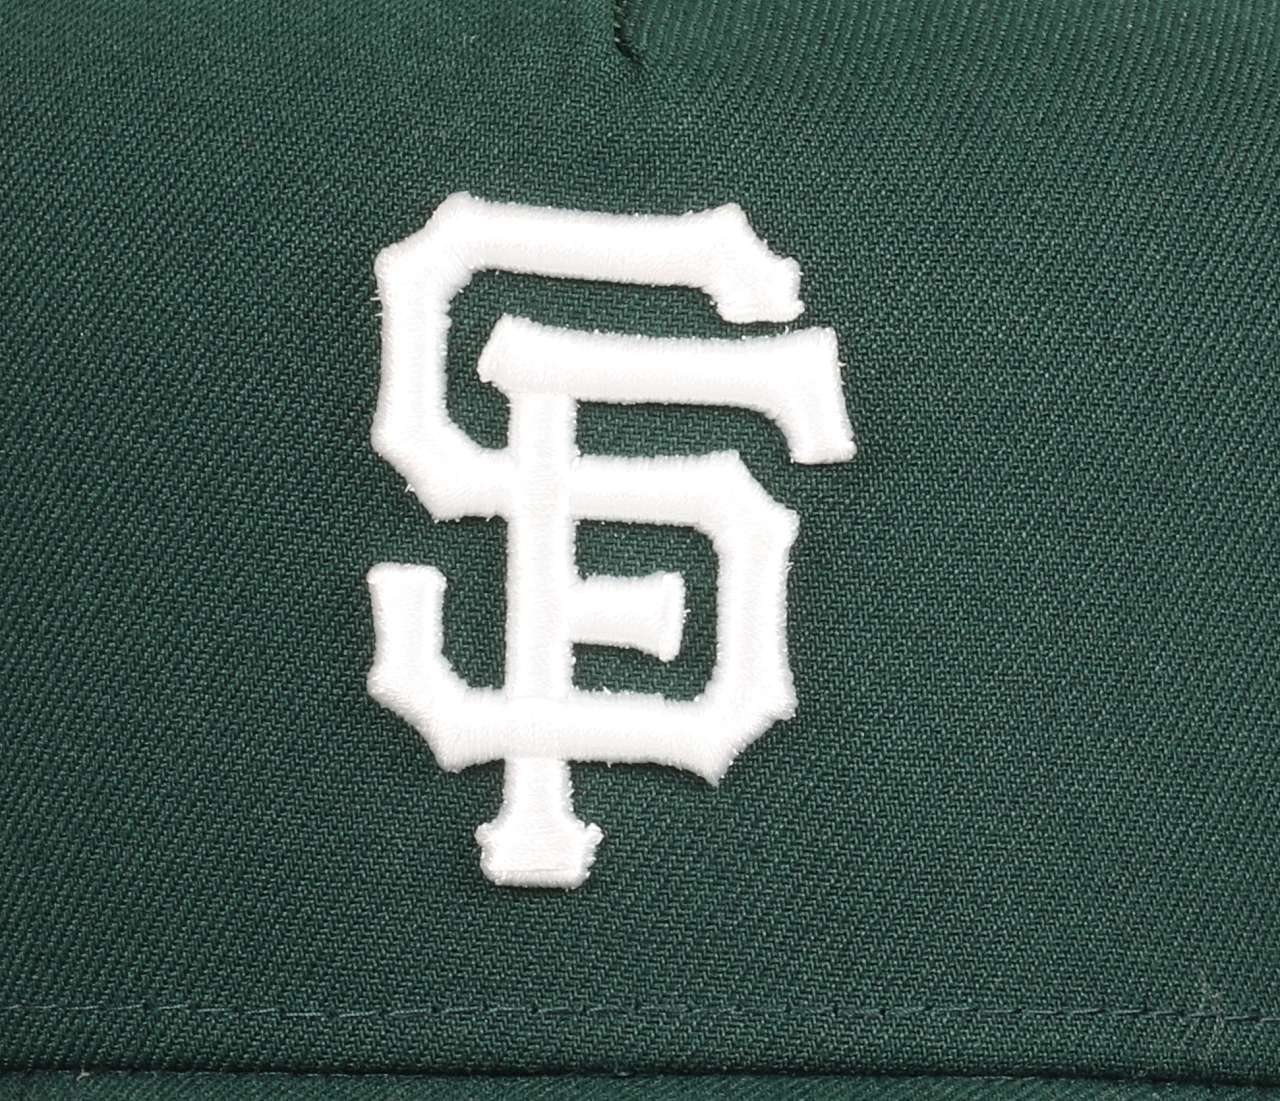 San Francisco Giants MLB World Series 2010 Sidepatch Dark Green 9Forty A-Frame Adjustable Cap New Era